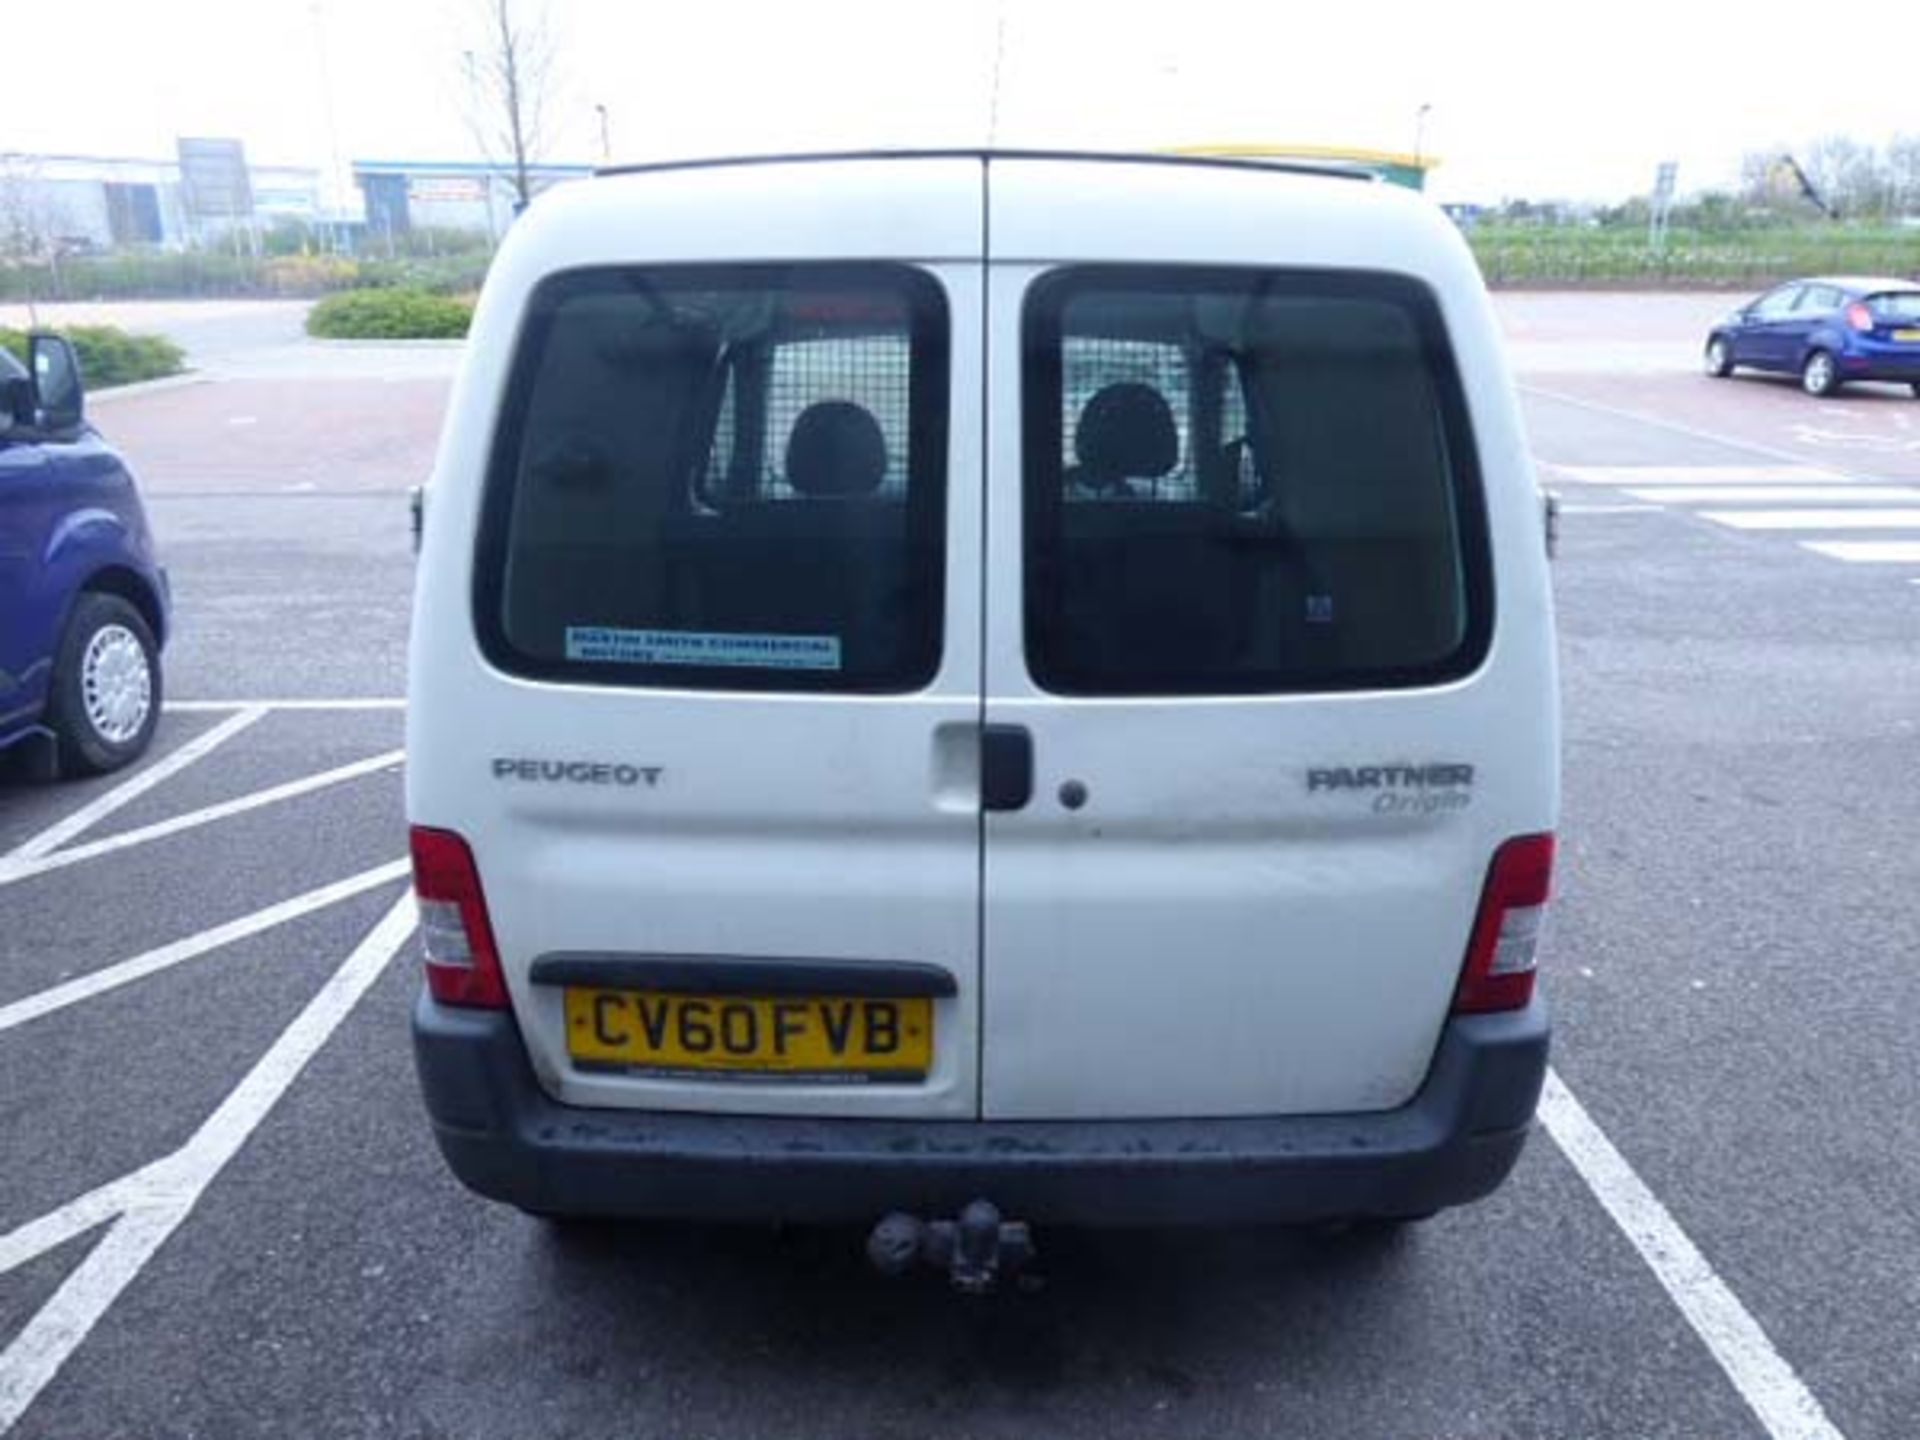 CV60 FVB Peugeot Partner 600 Professional HDI Van,in white, first registered 28/09/2010, MOT 21/10/ - Image 3 of 8